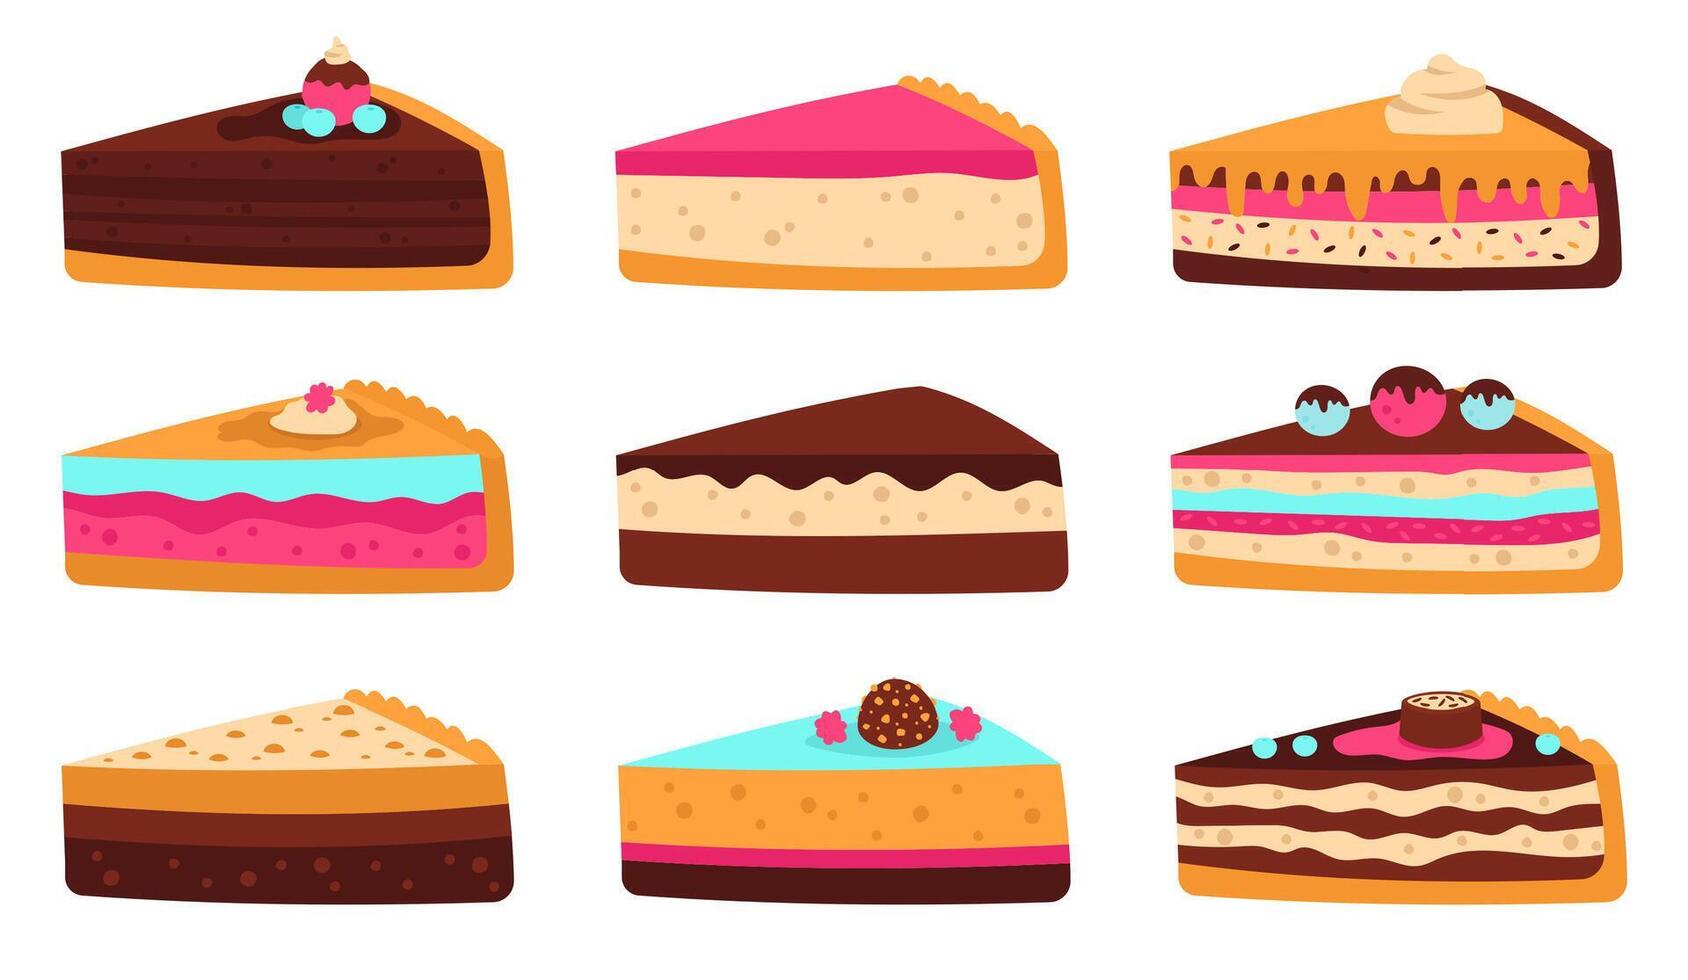 Cake slices. Sweet sliced birthday pie, cheesecake, layered sponge cake, delicious pastry glaze fruit, chocolate dessert vector illustration set